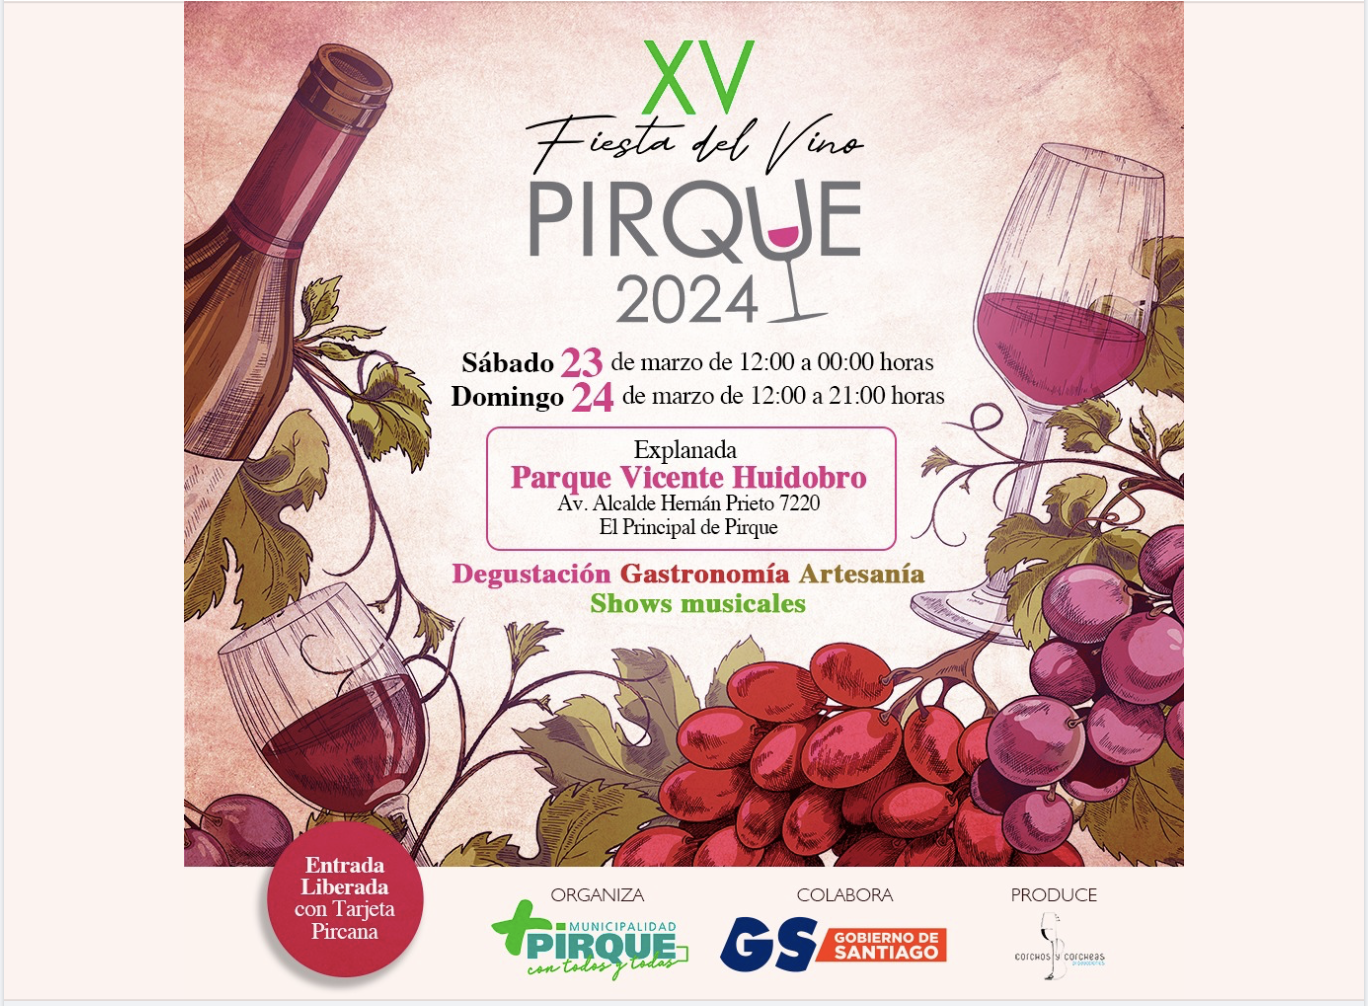 Fiesta del vino Pirque 2024